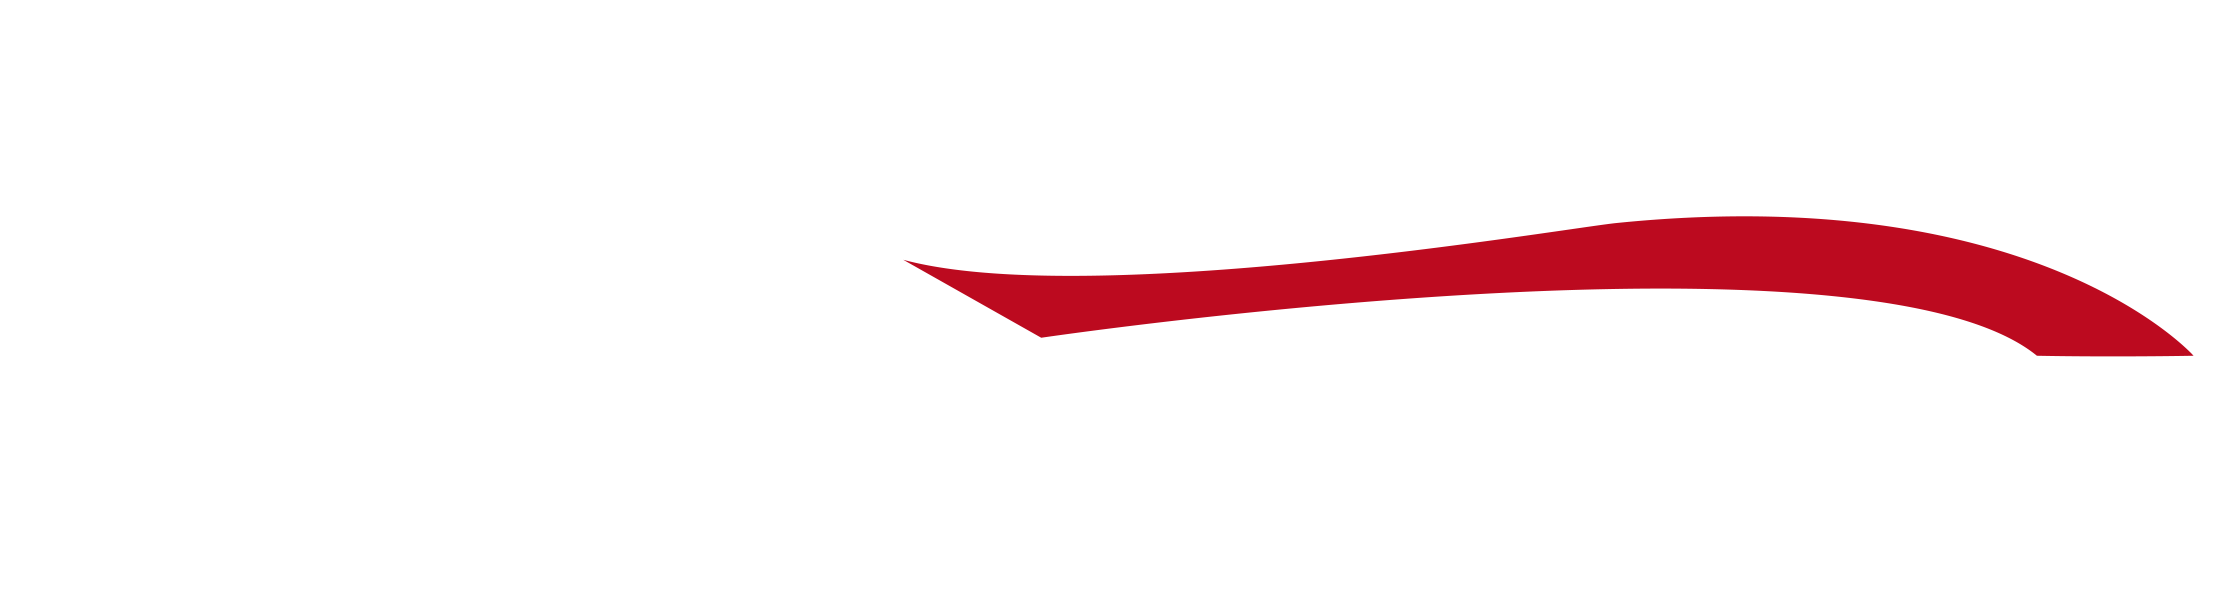 Siena Motors logo